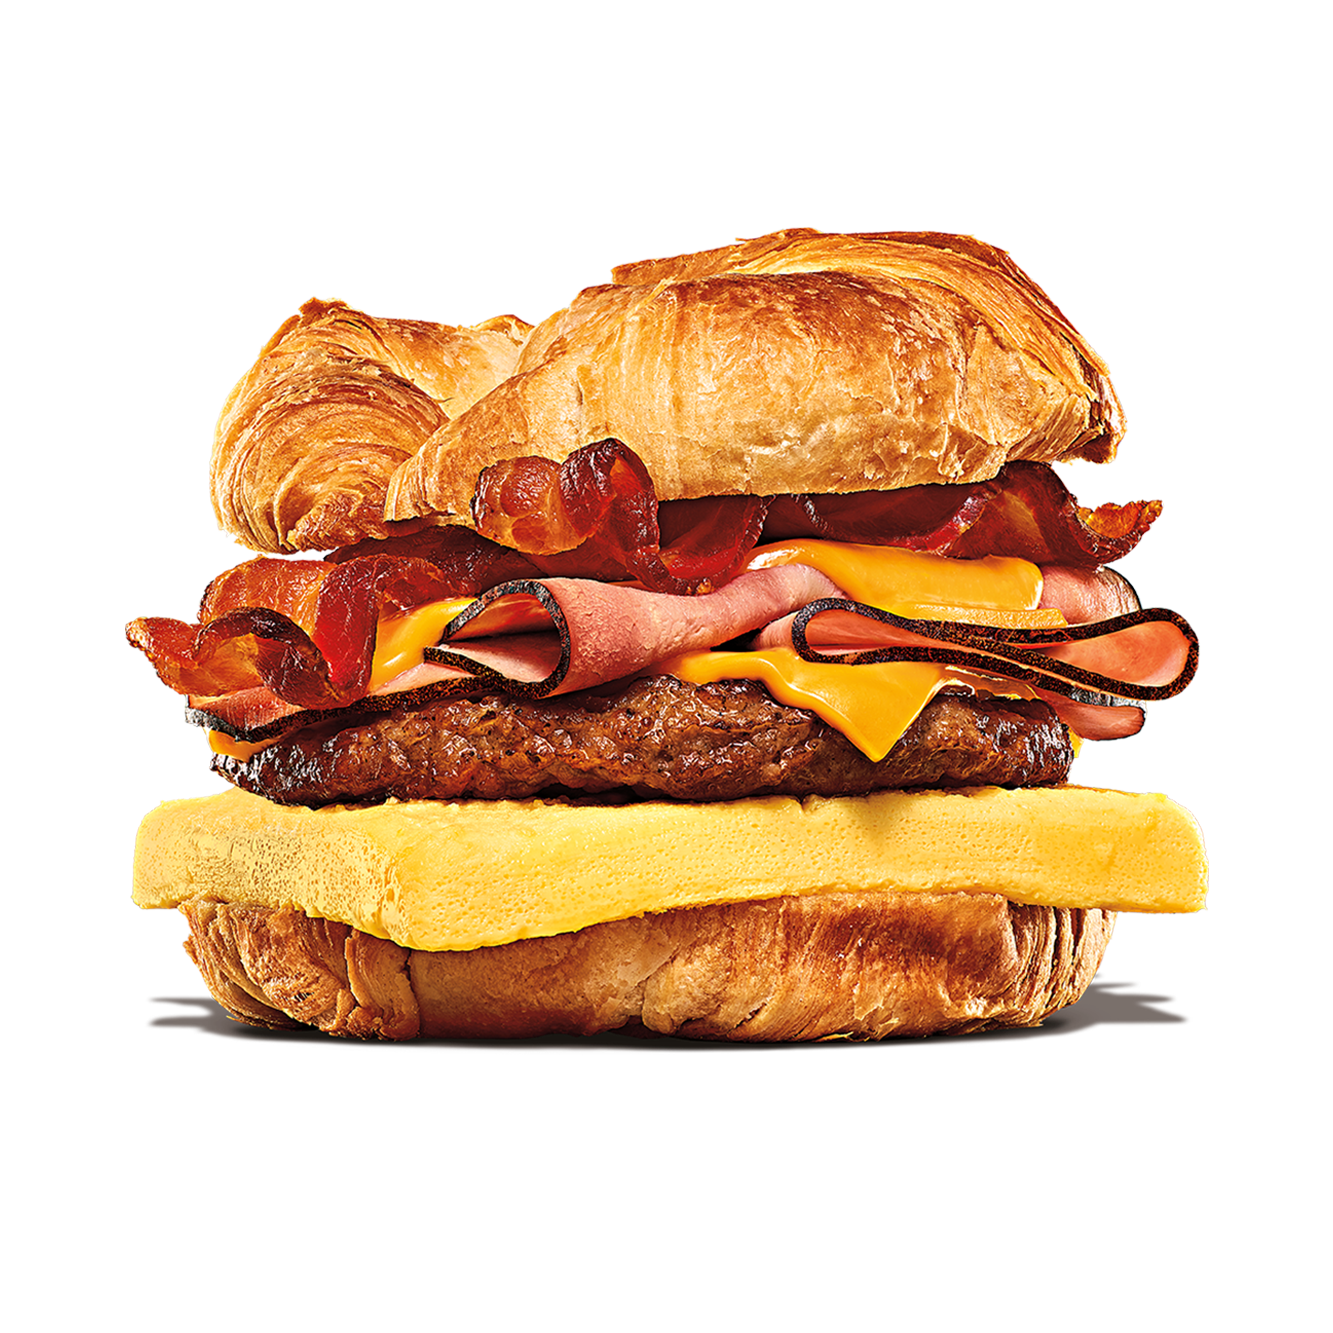 Burger King Brea (714)395-6401